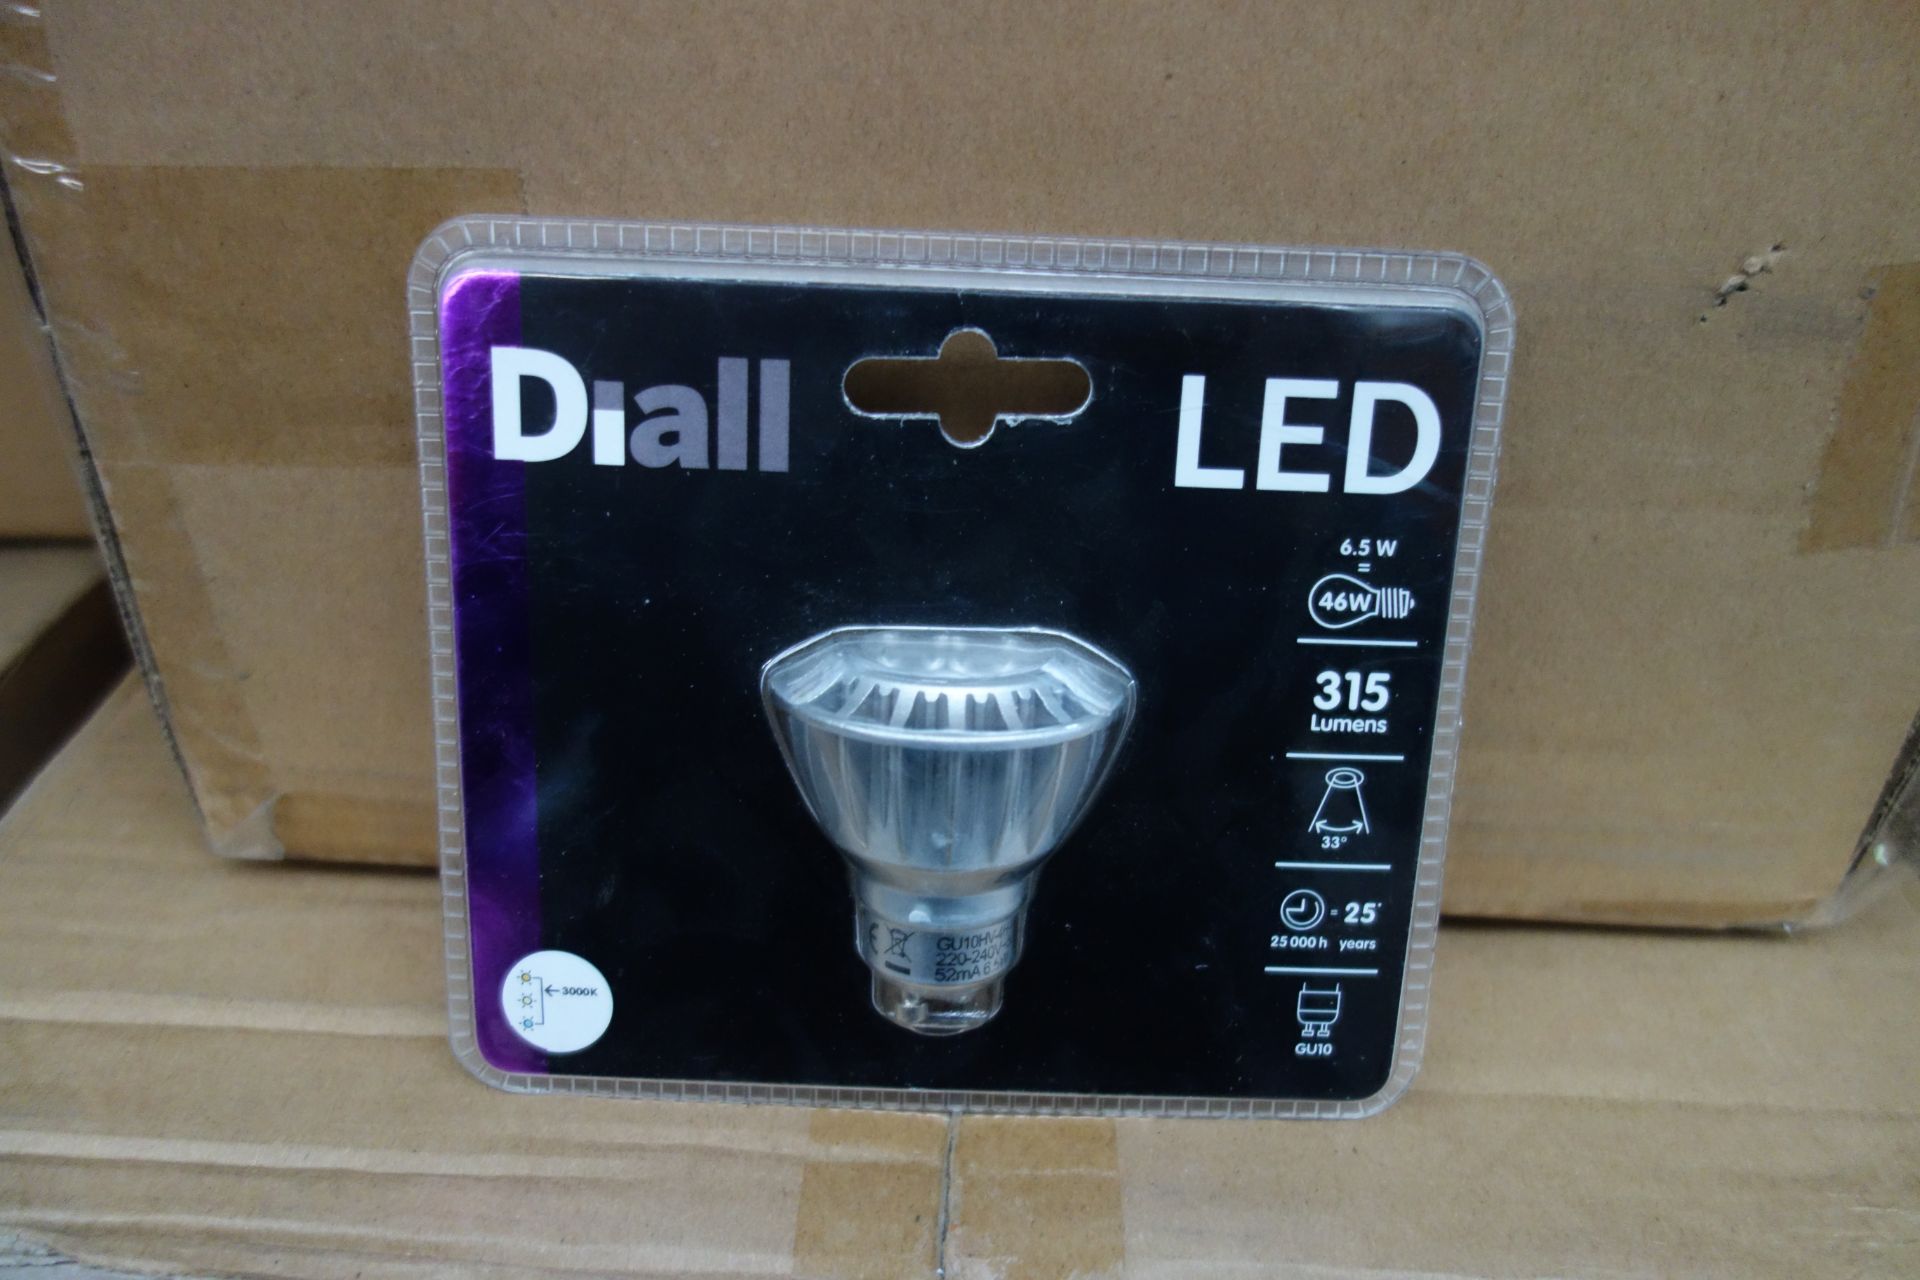 12 x Diall LED GU10 Lightbulbs. 315 lumens. Upto 25,000 hours or 25 years use! RRP £11.99 each,